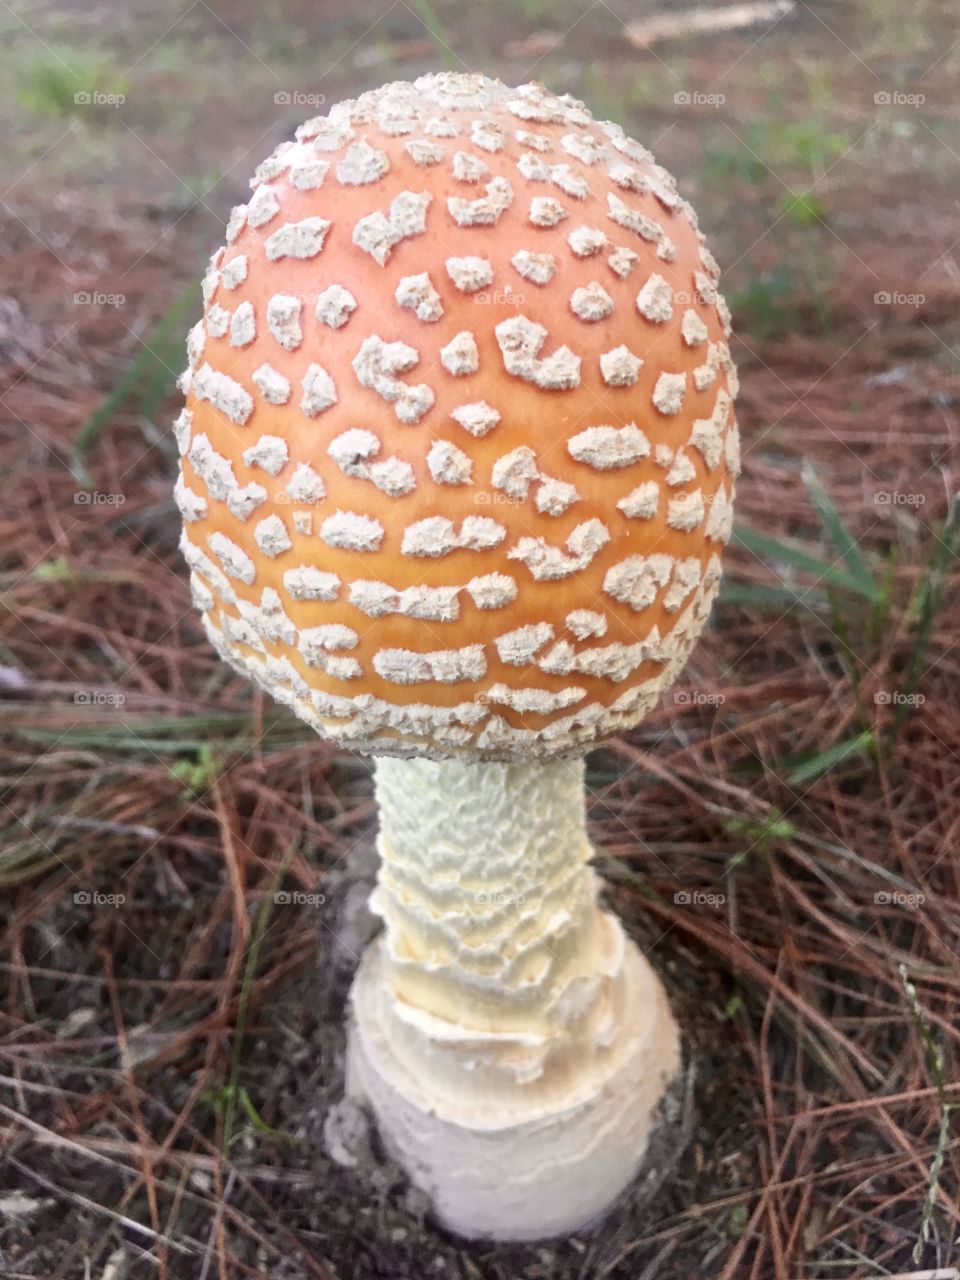 What a wonderful specimen of a wild mushroom.